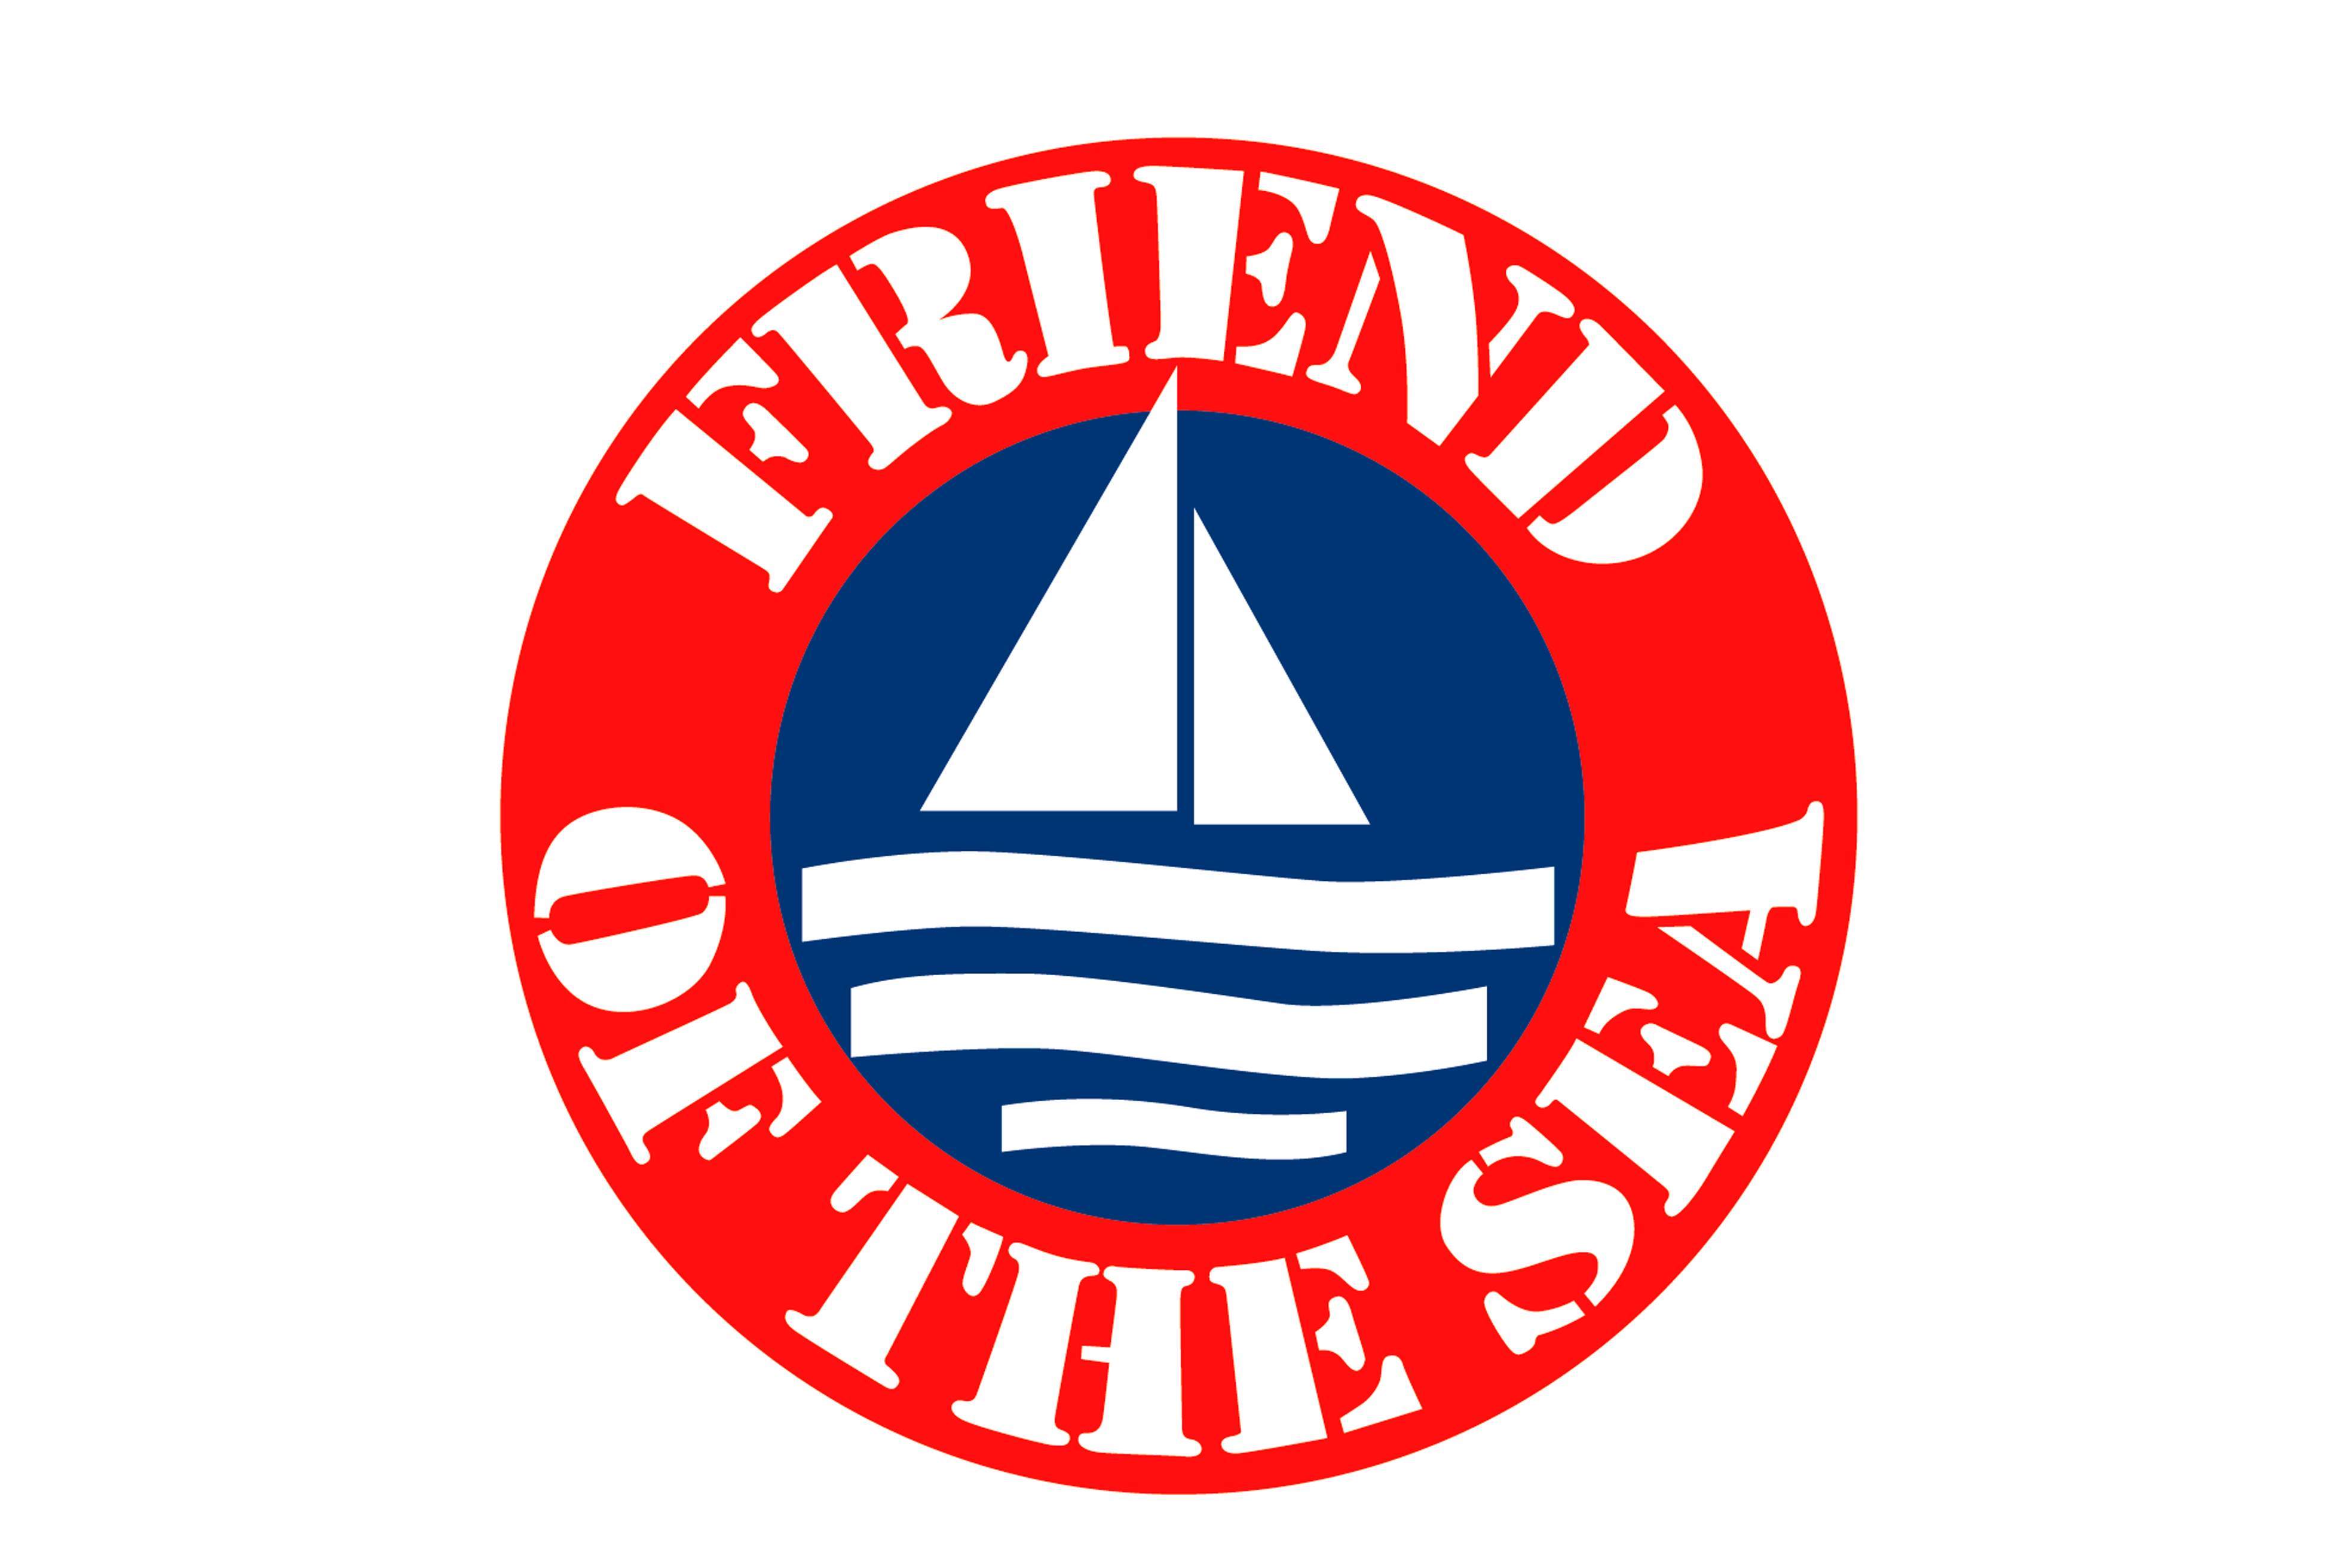 Friends of the sea logo